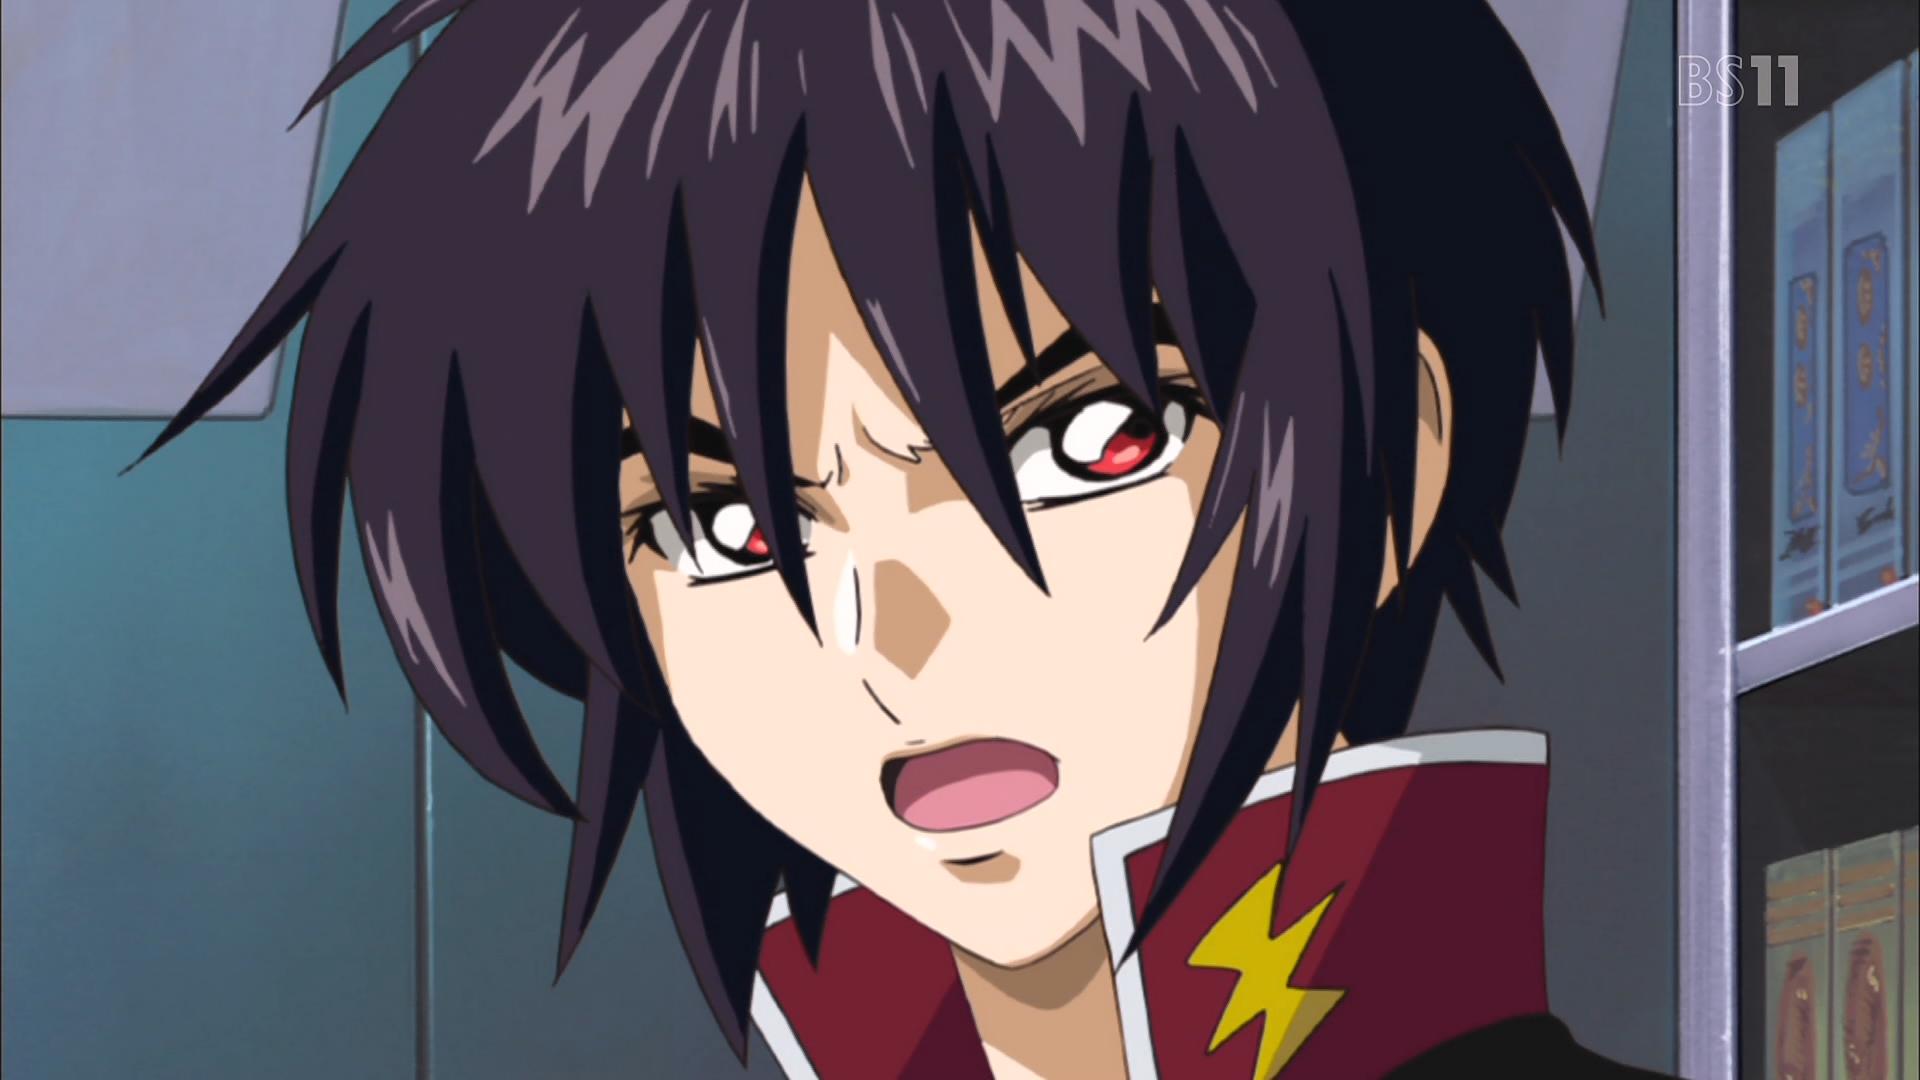 Anime 1920x1080 anime anime boys anime screenshot Mobile Suit Gundam SEED Destiny short hair dark hair Shinn Asuka